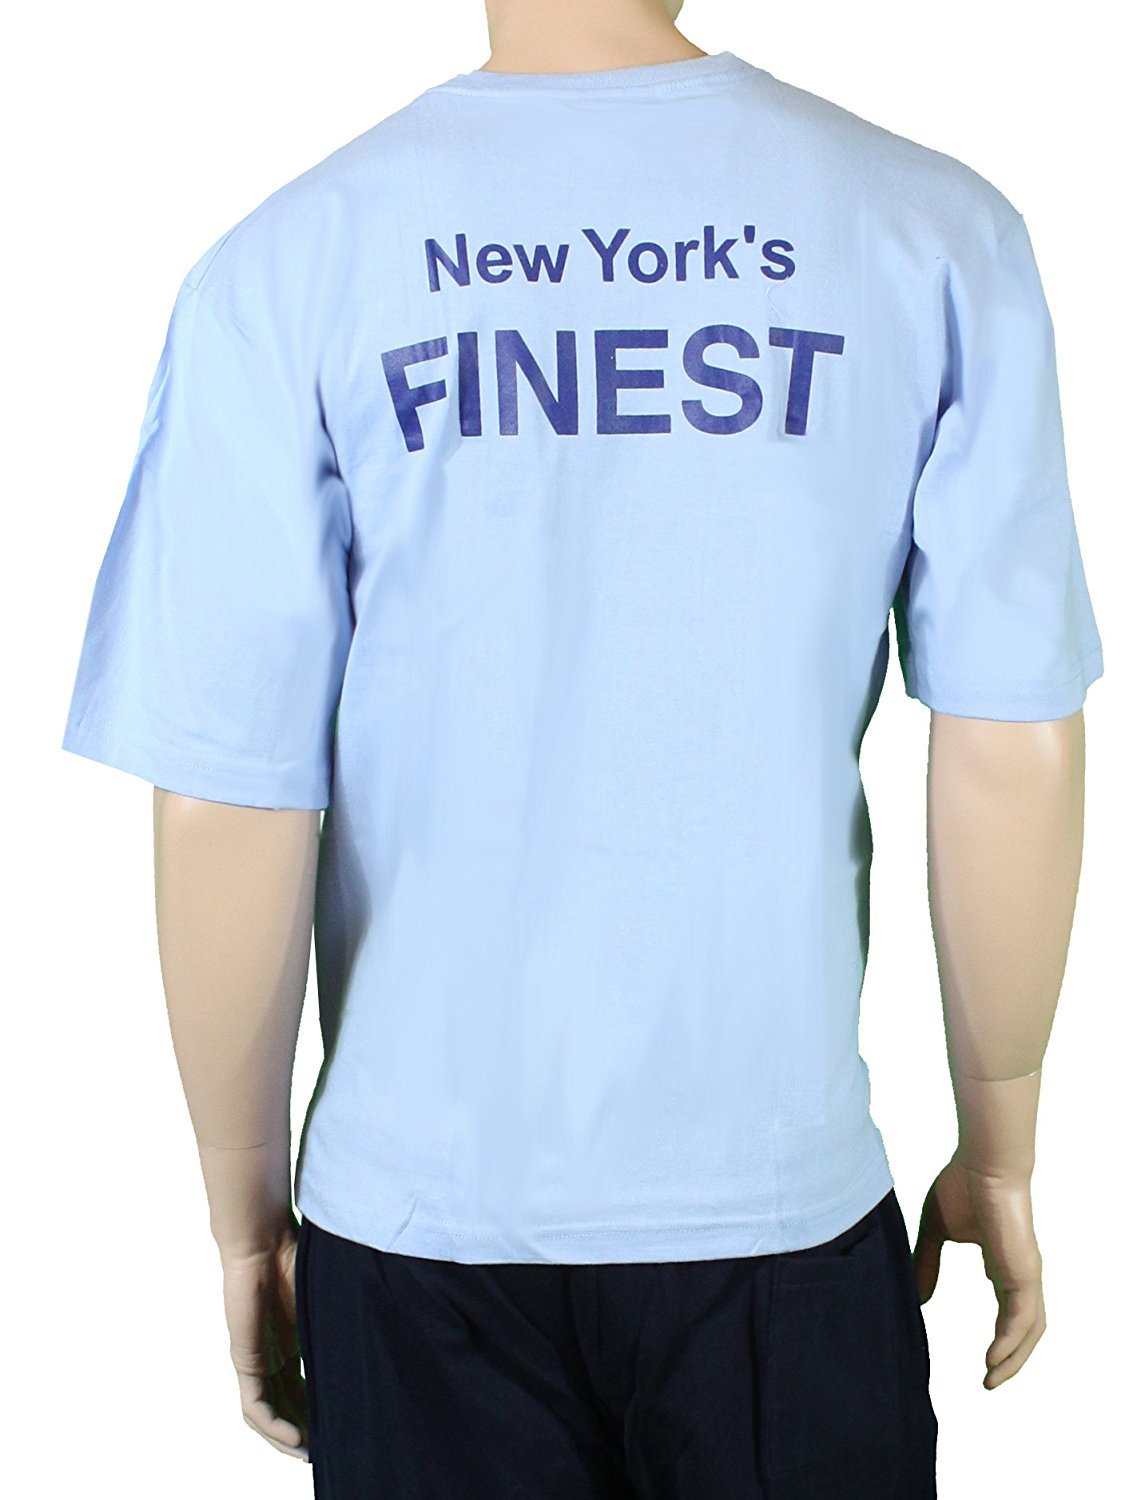 NYPD Short Sleeve New York Finest Back T-Shirt Light Blue